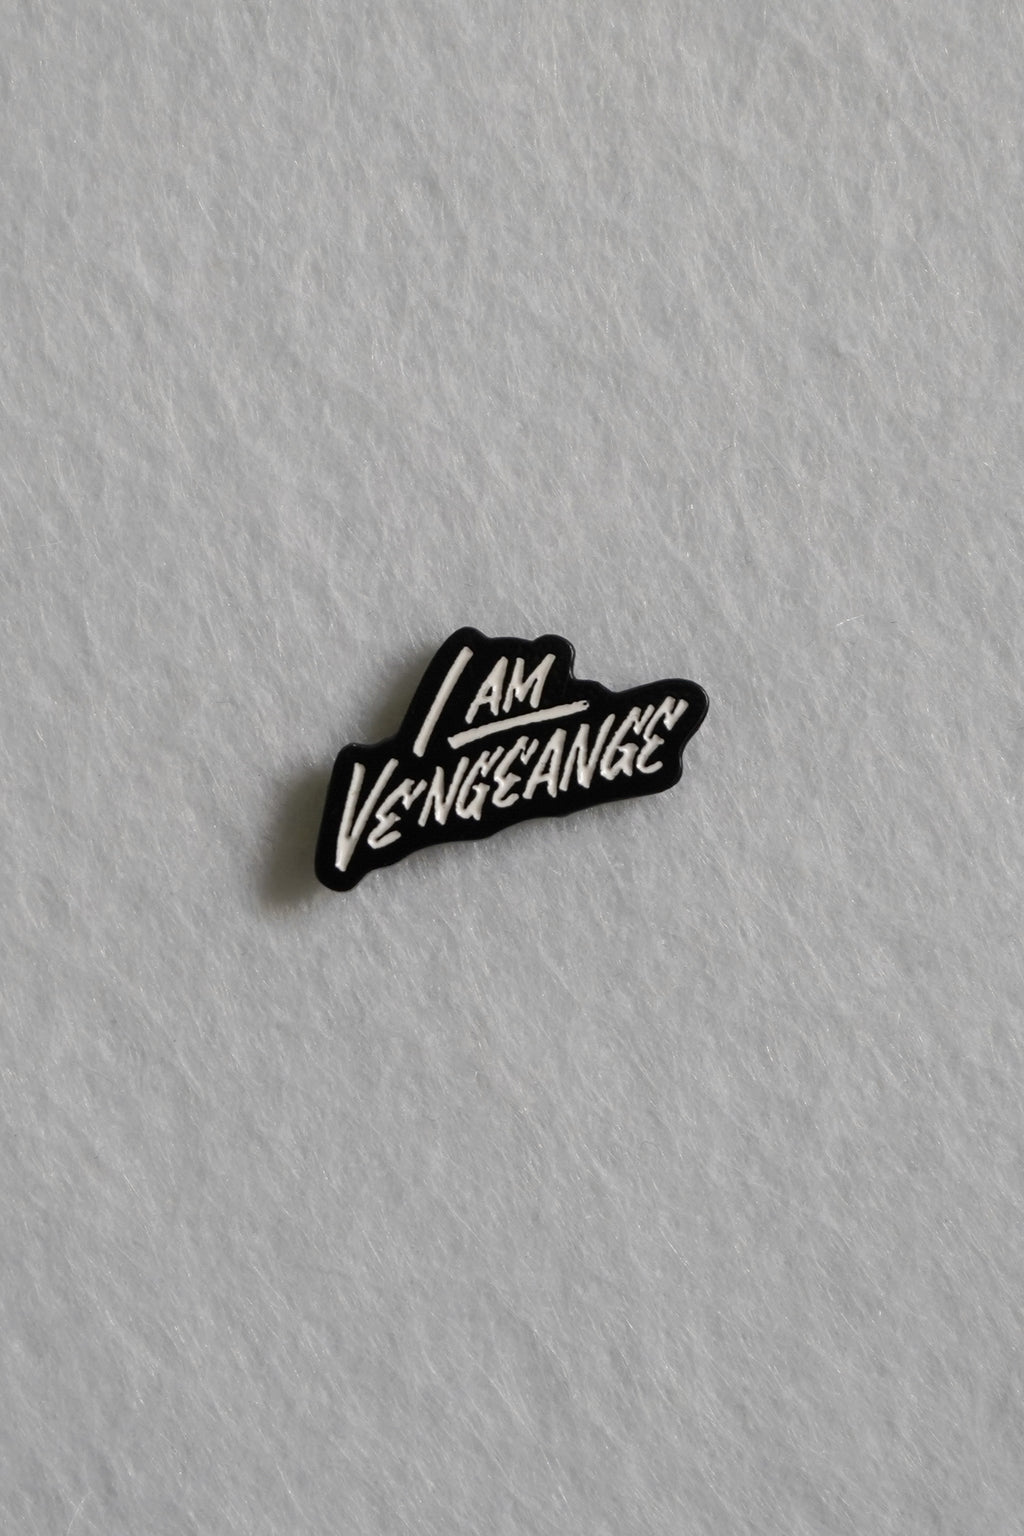 I am Vengeance Enamel Pin | Patreon Pin Club